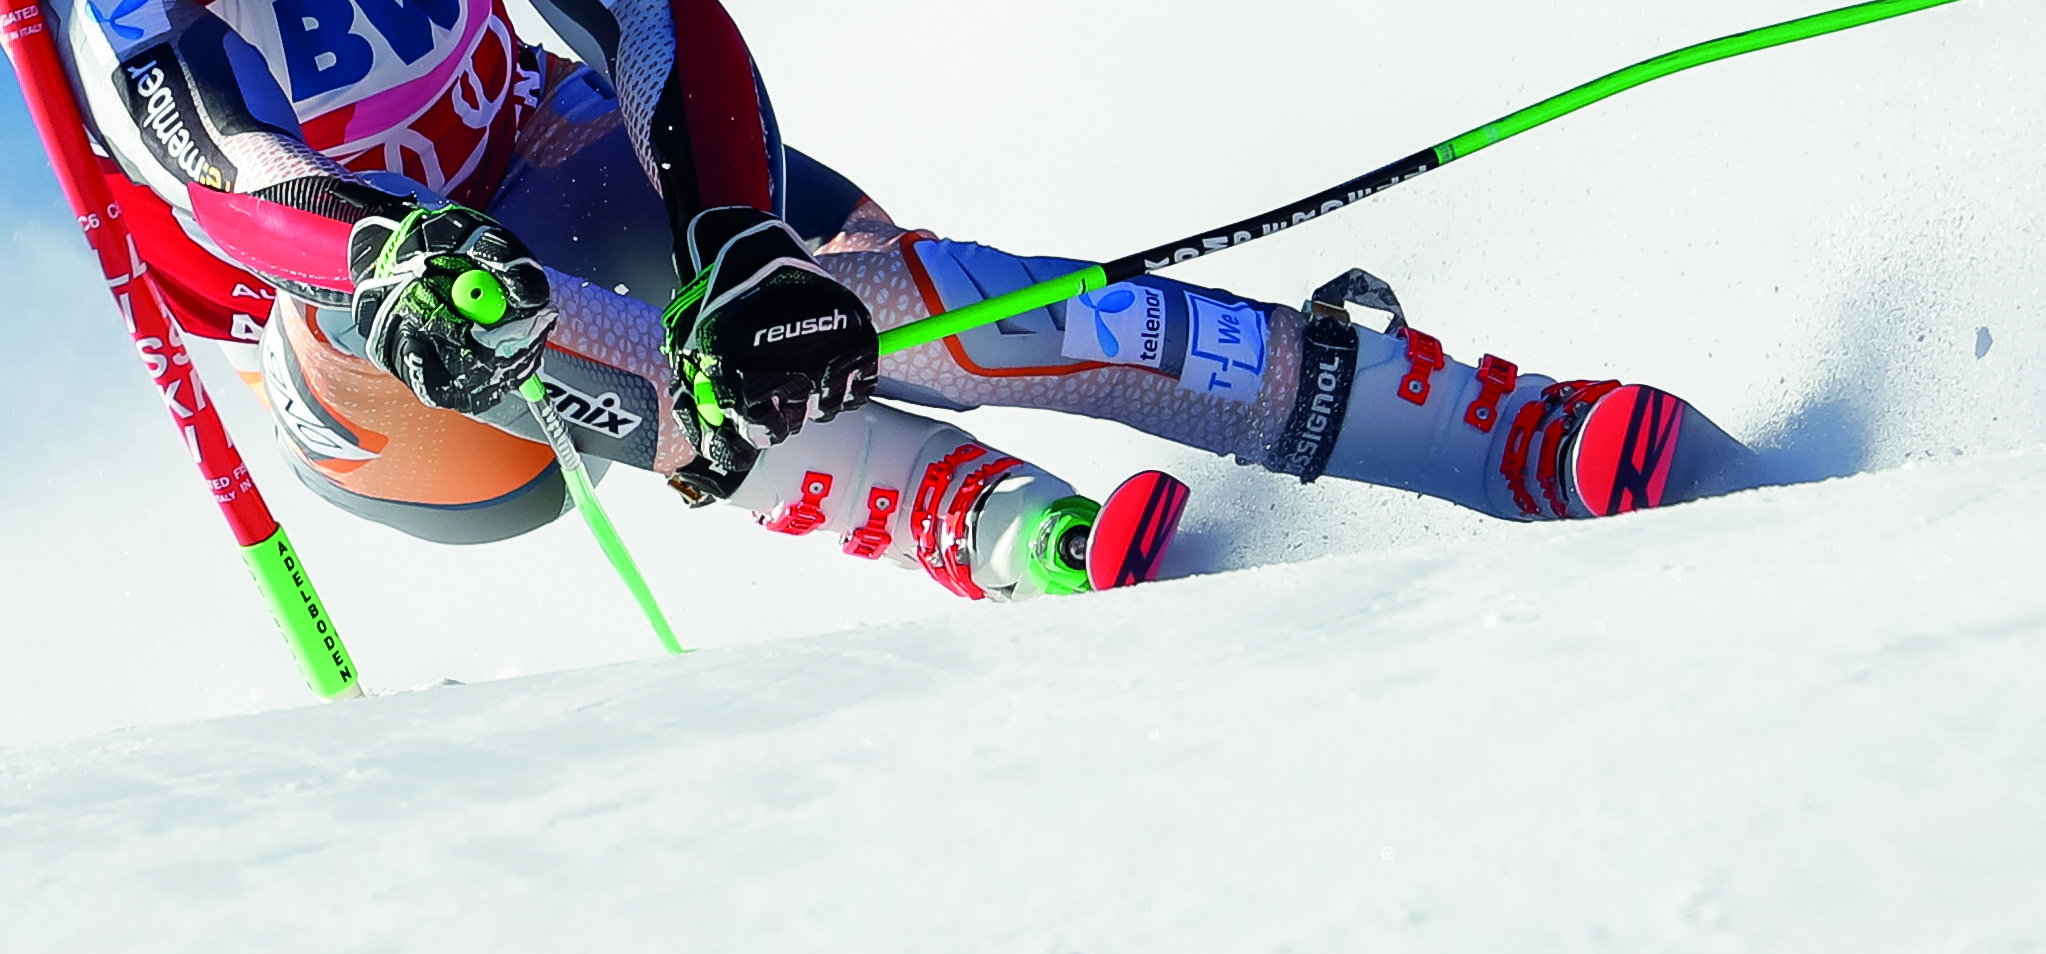 ADELBODEN, SWITZERLAND - JANUARY 11 : Henrik Kristoffersen of Norway competes during the Audi FIS Alpine Ski World Cup Men's Giant Slalom on January 11, 2020 in Adelboden Switzerland. (Photo by Alexis Boichard/Agence Zoom)